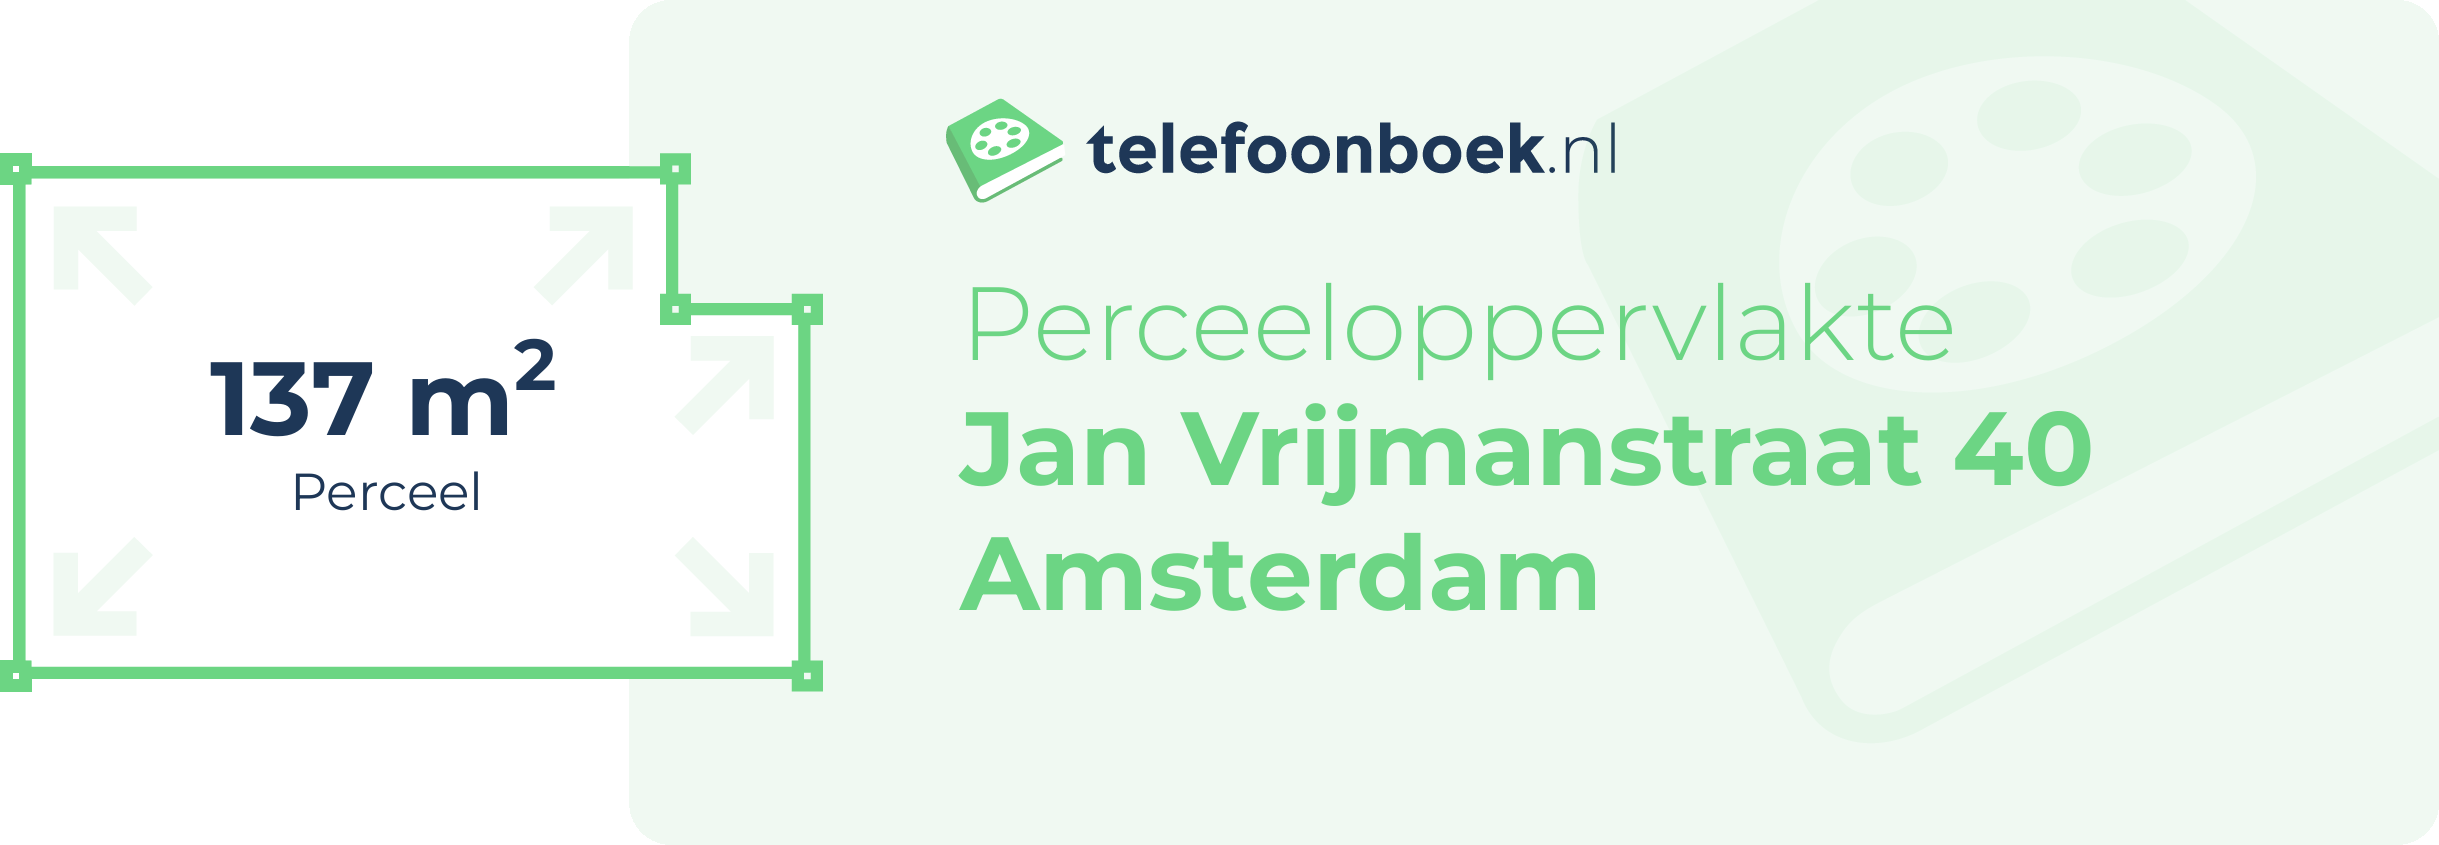 Perceeloppervlakte Jan Vrijmanstraat 40 Amsterdam